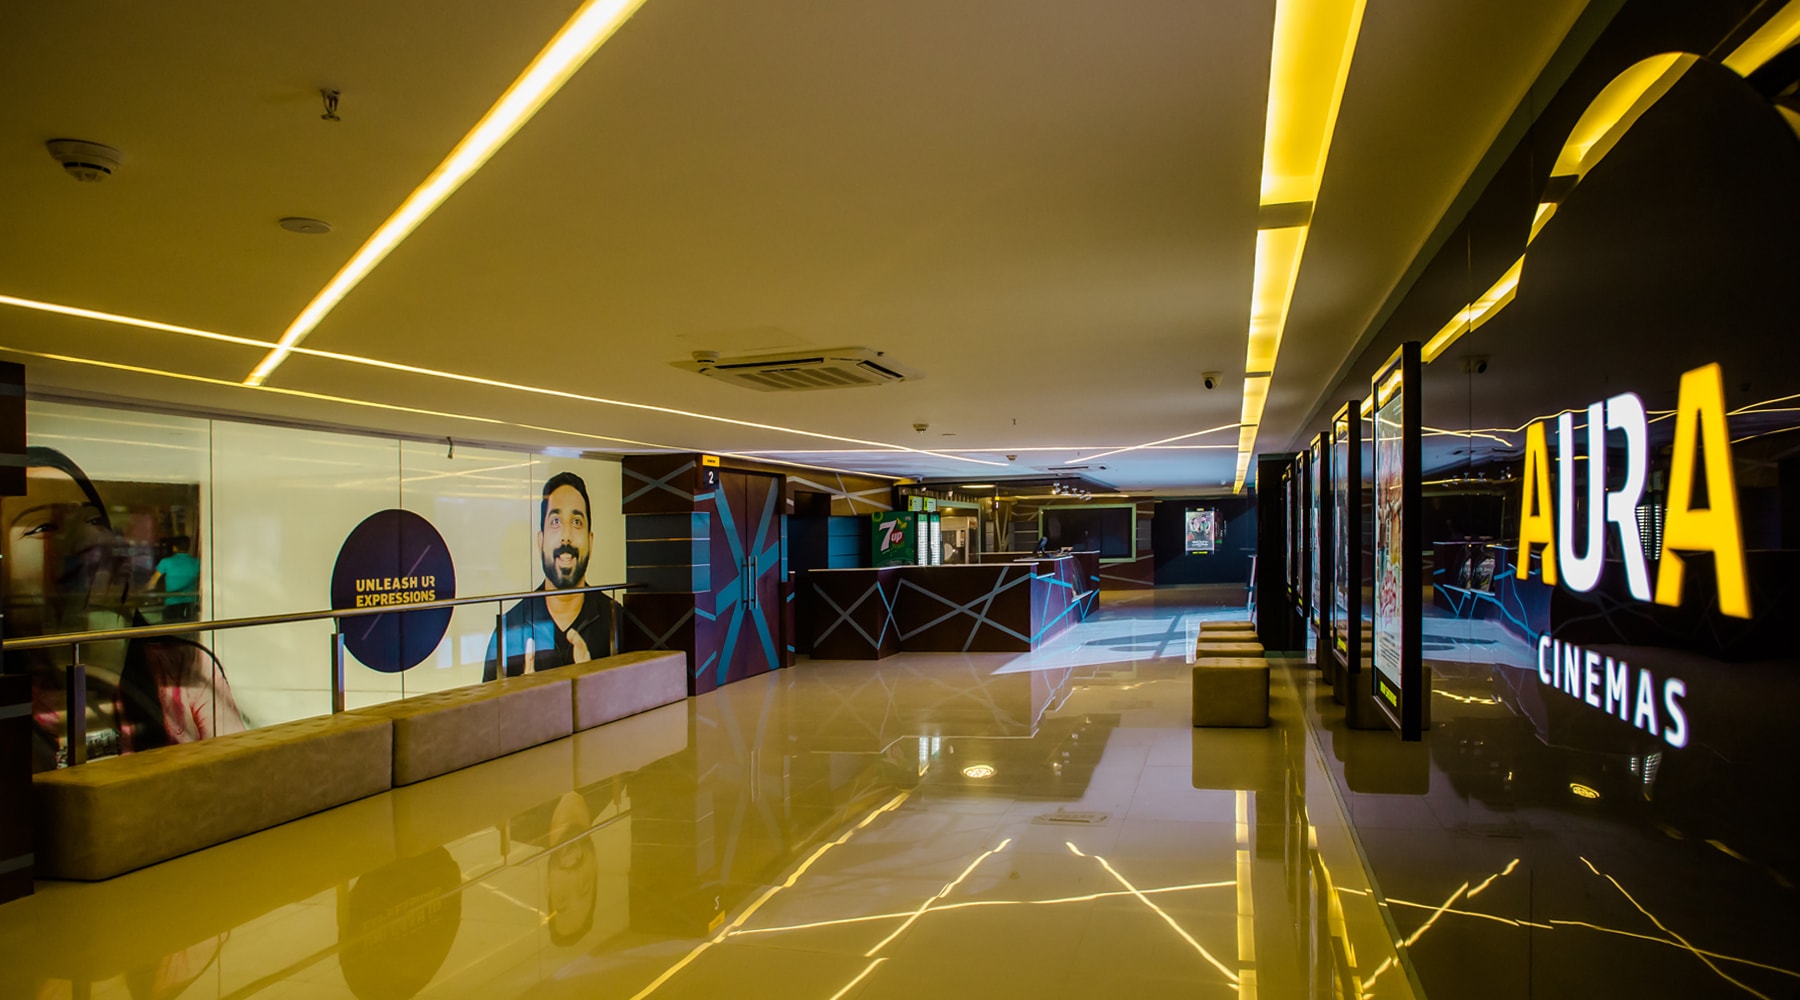 Aura cinemas branding-lobby design